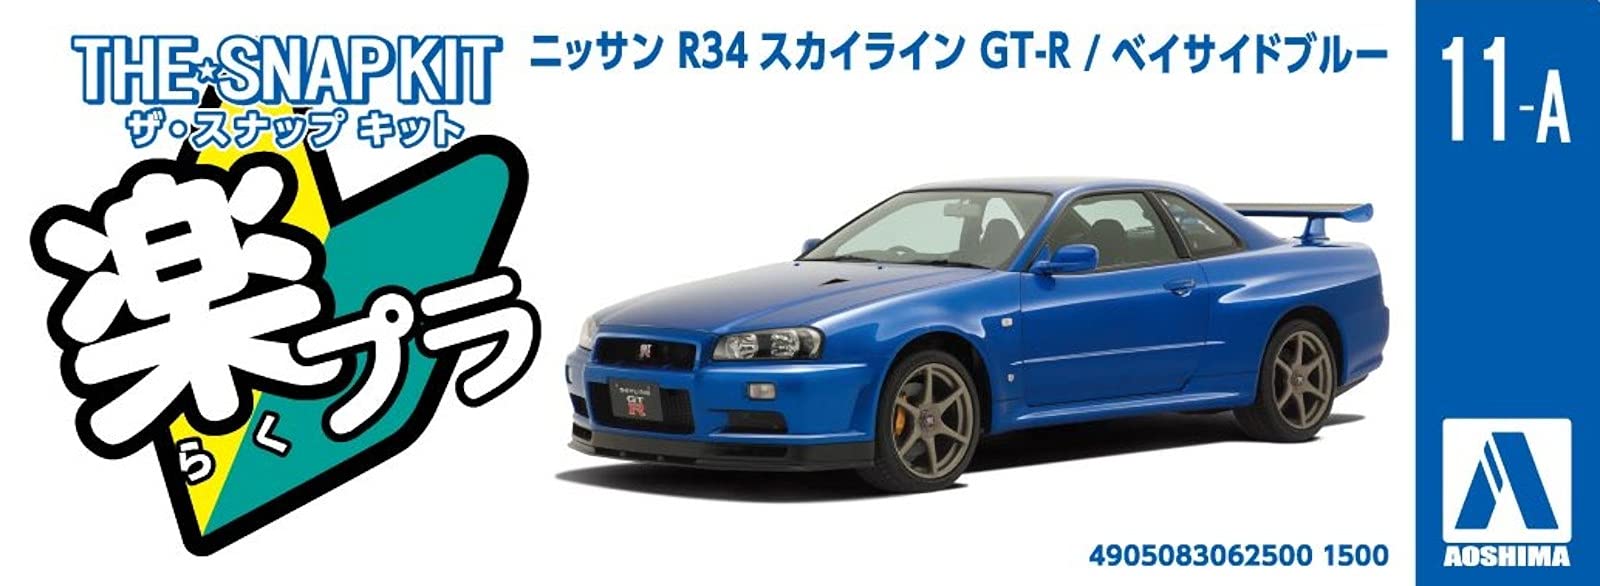 AOSHIMA The Snap Kit 1/32 Nissan R34 Skyline Gt-R Bayside Bleu Plastique Modèle